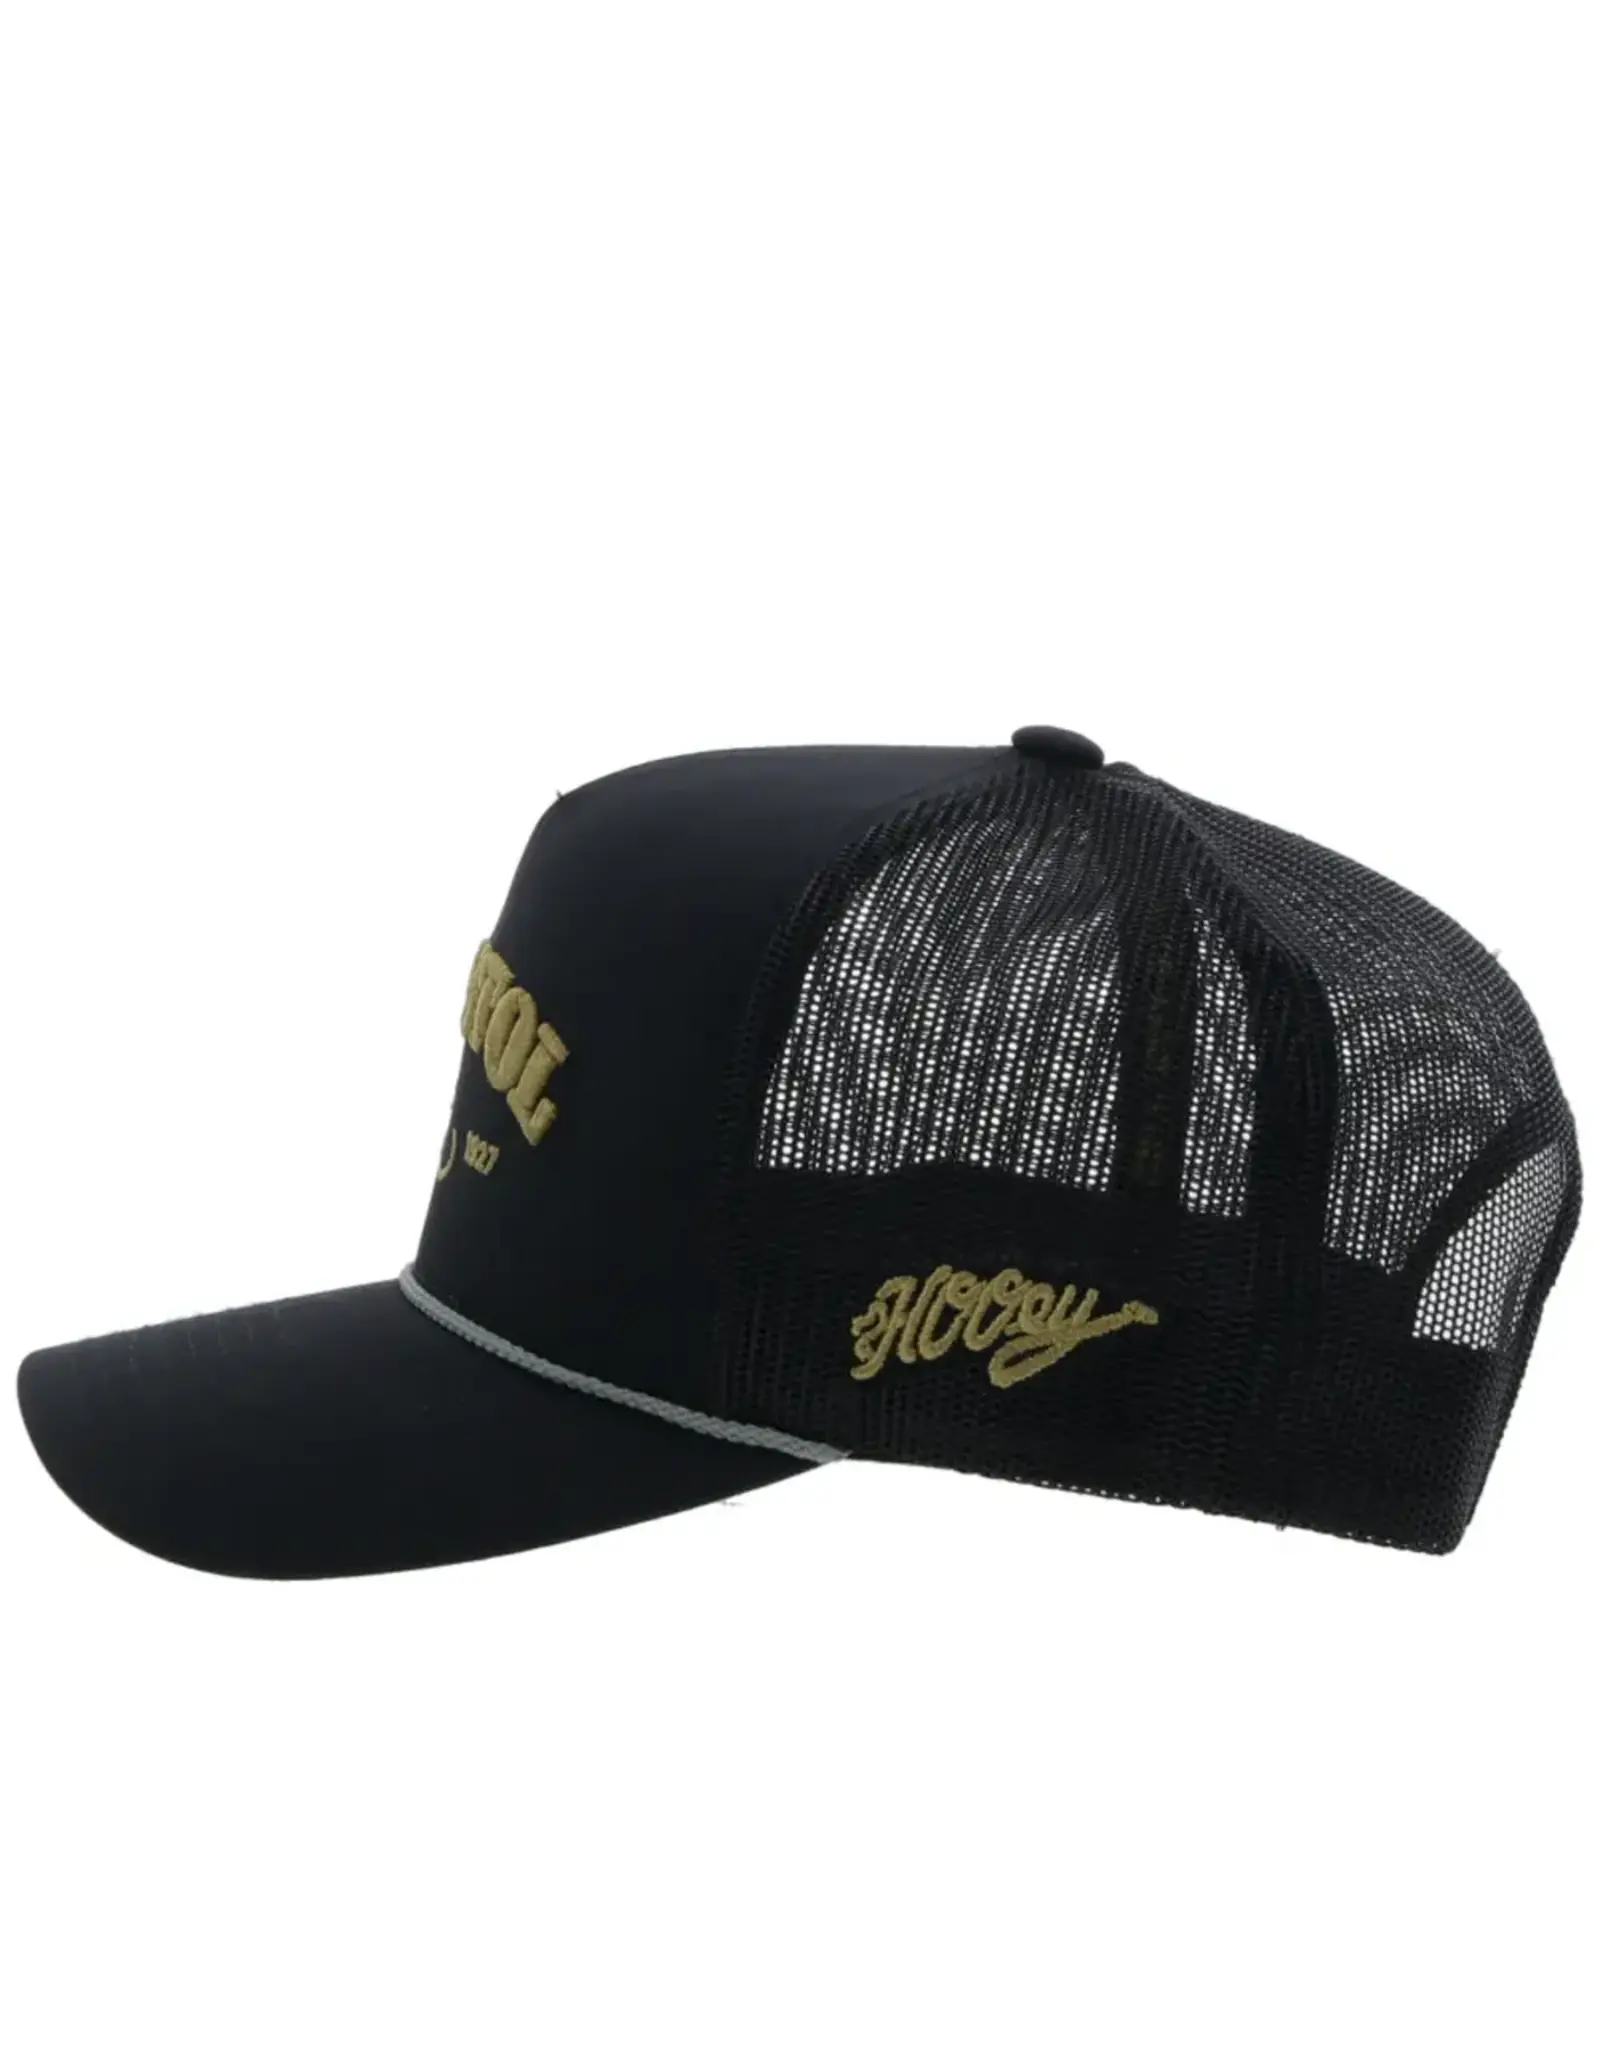 Hooey Brands Hat "Resistol" Black w/Gold Stitching